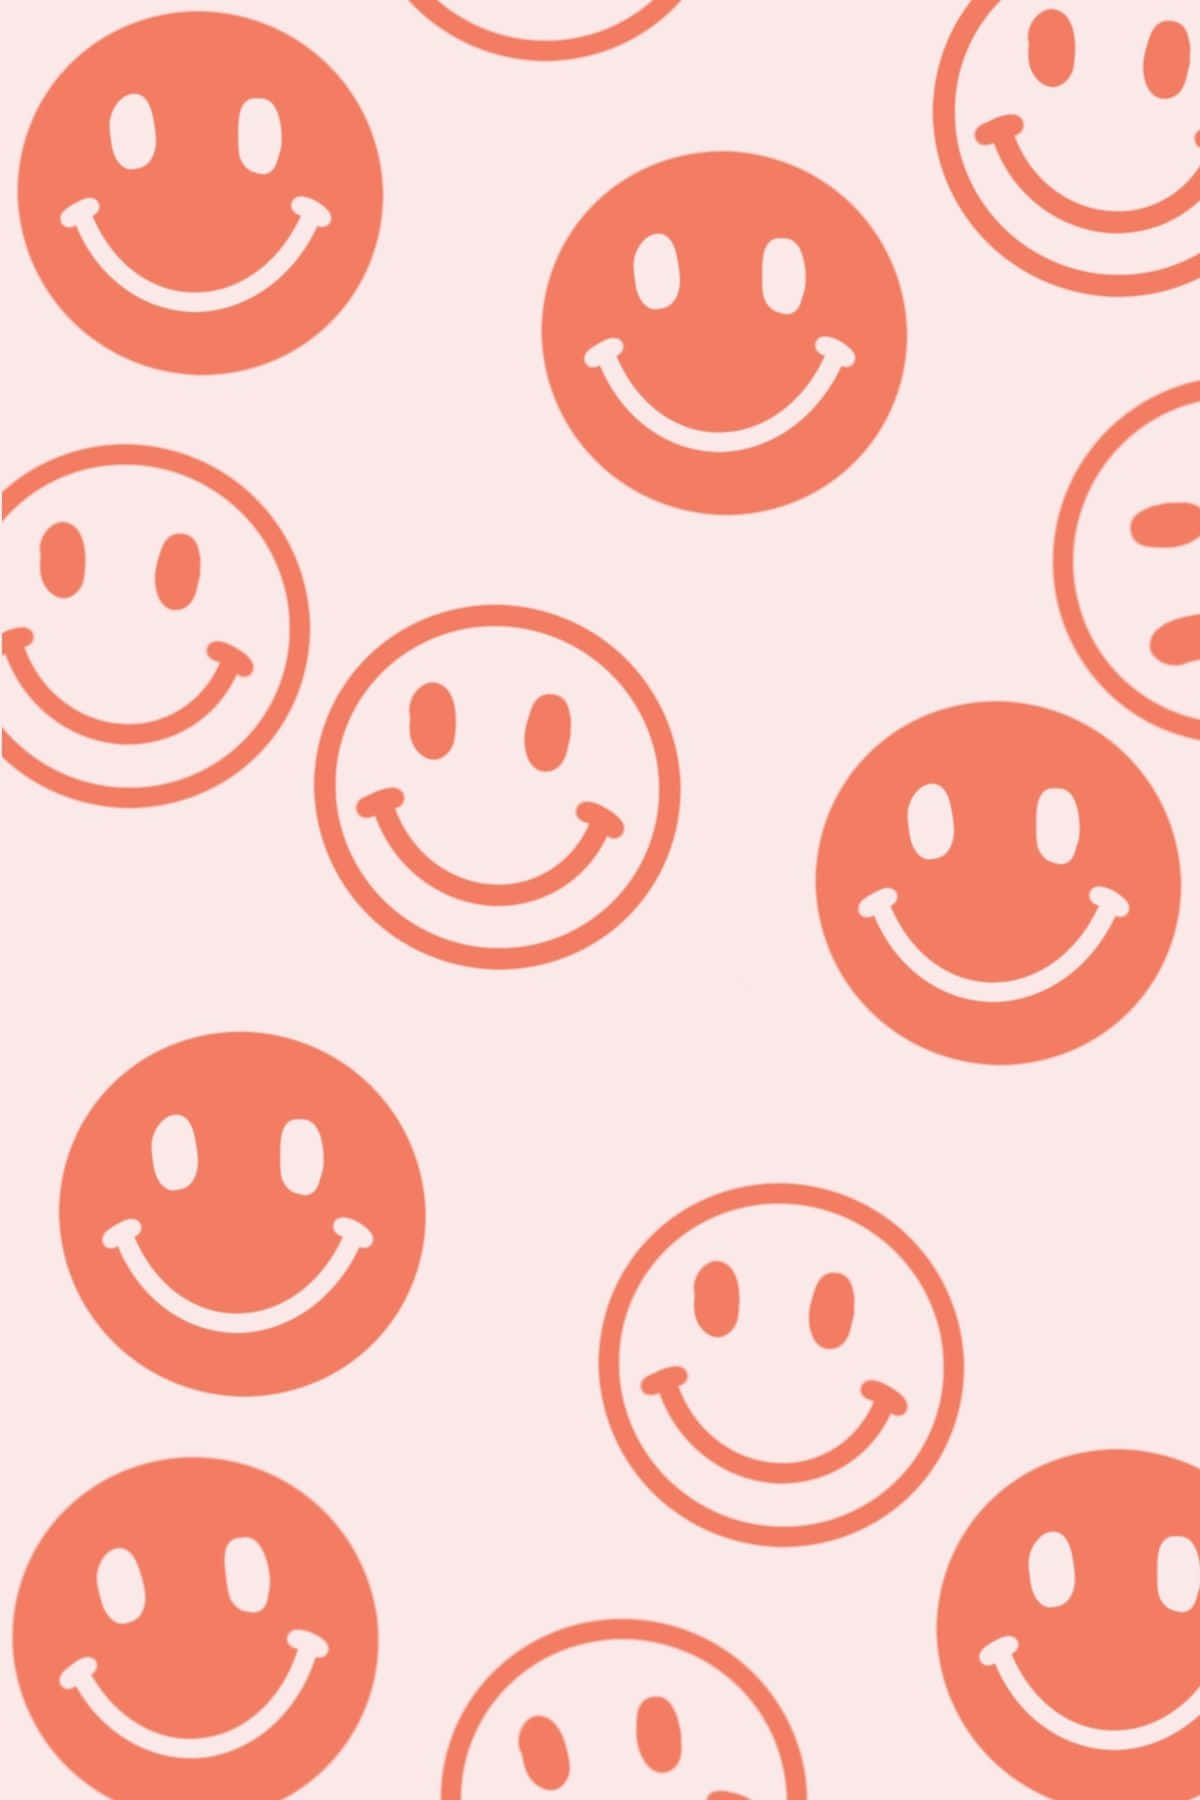 Smiley Pattern Pink Orange Background Wallpaper